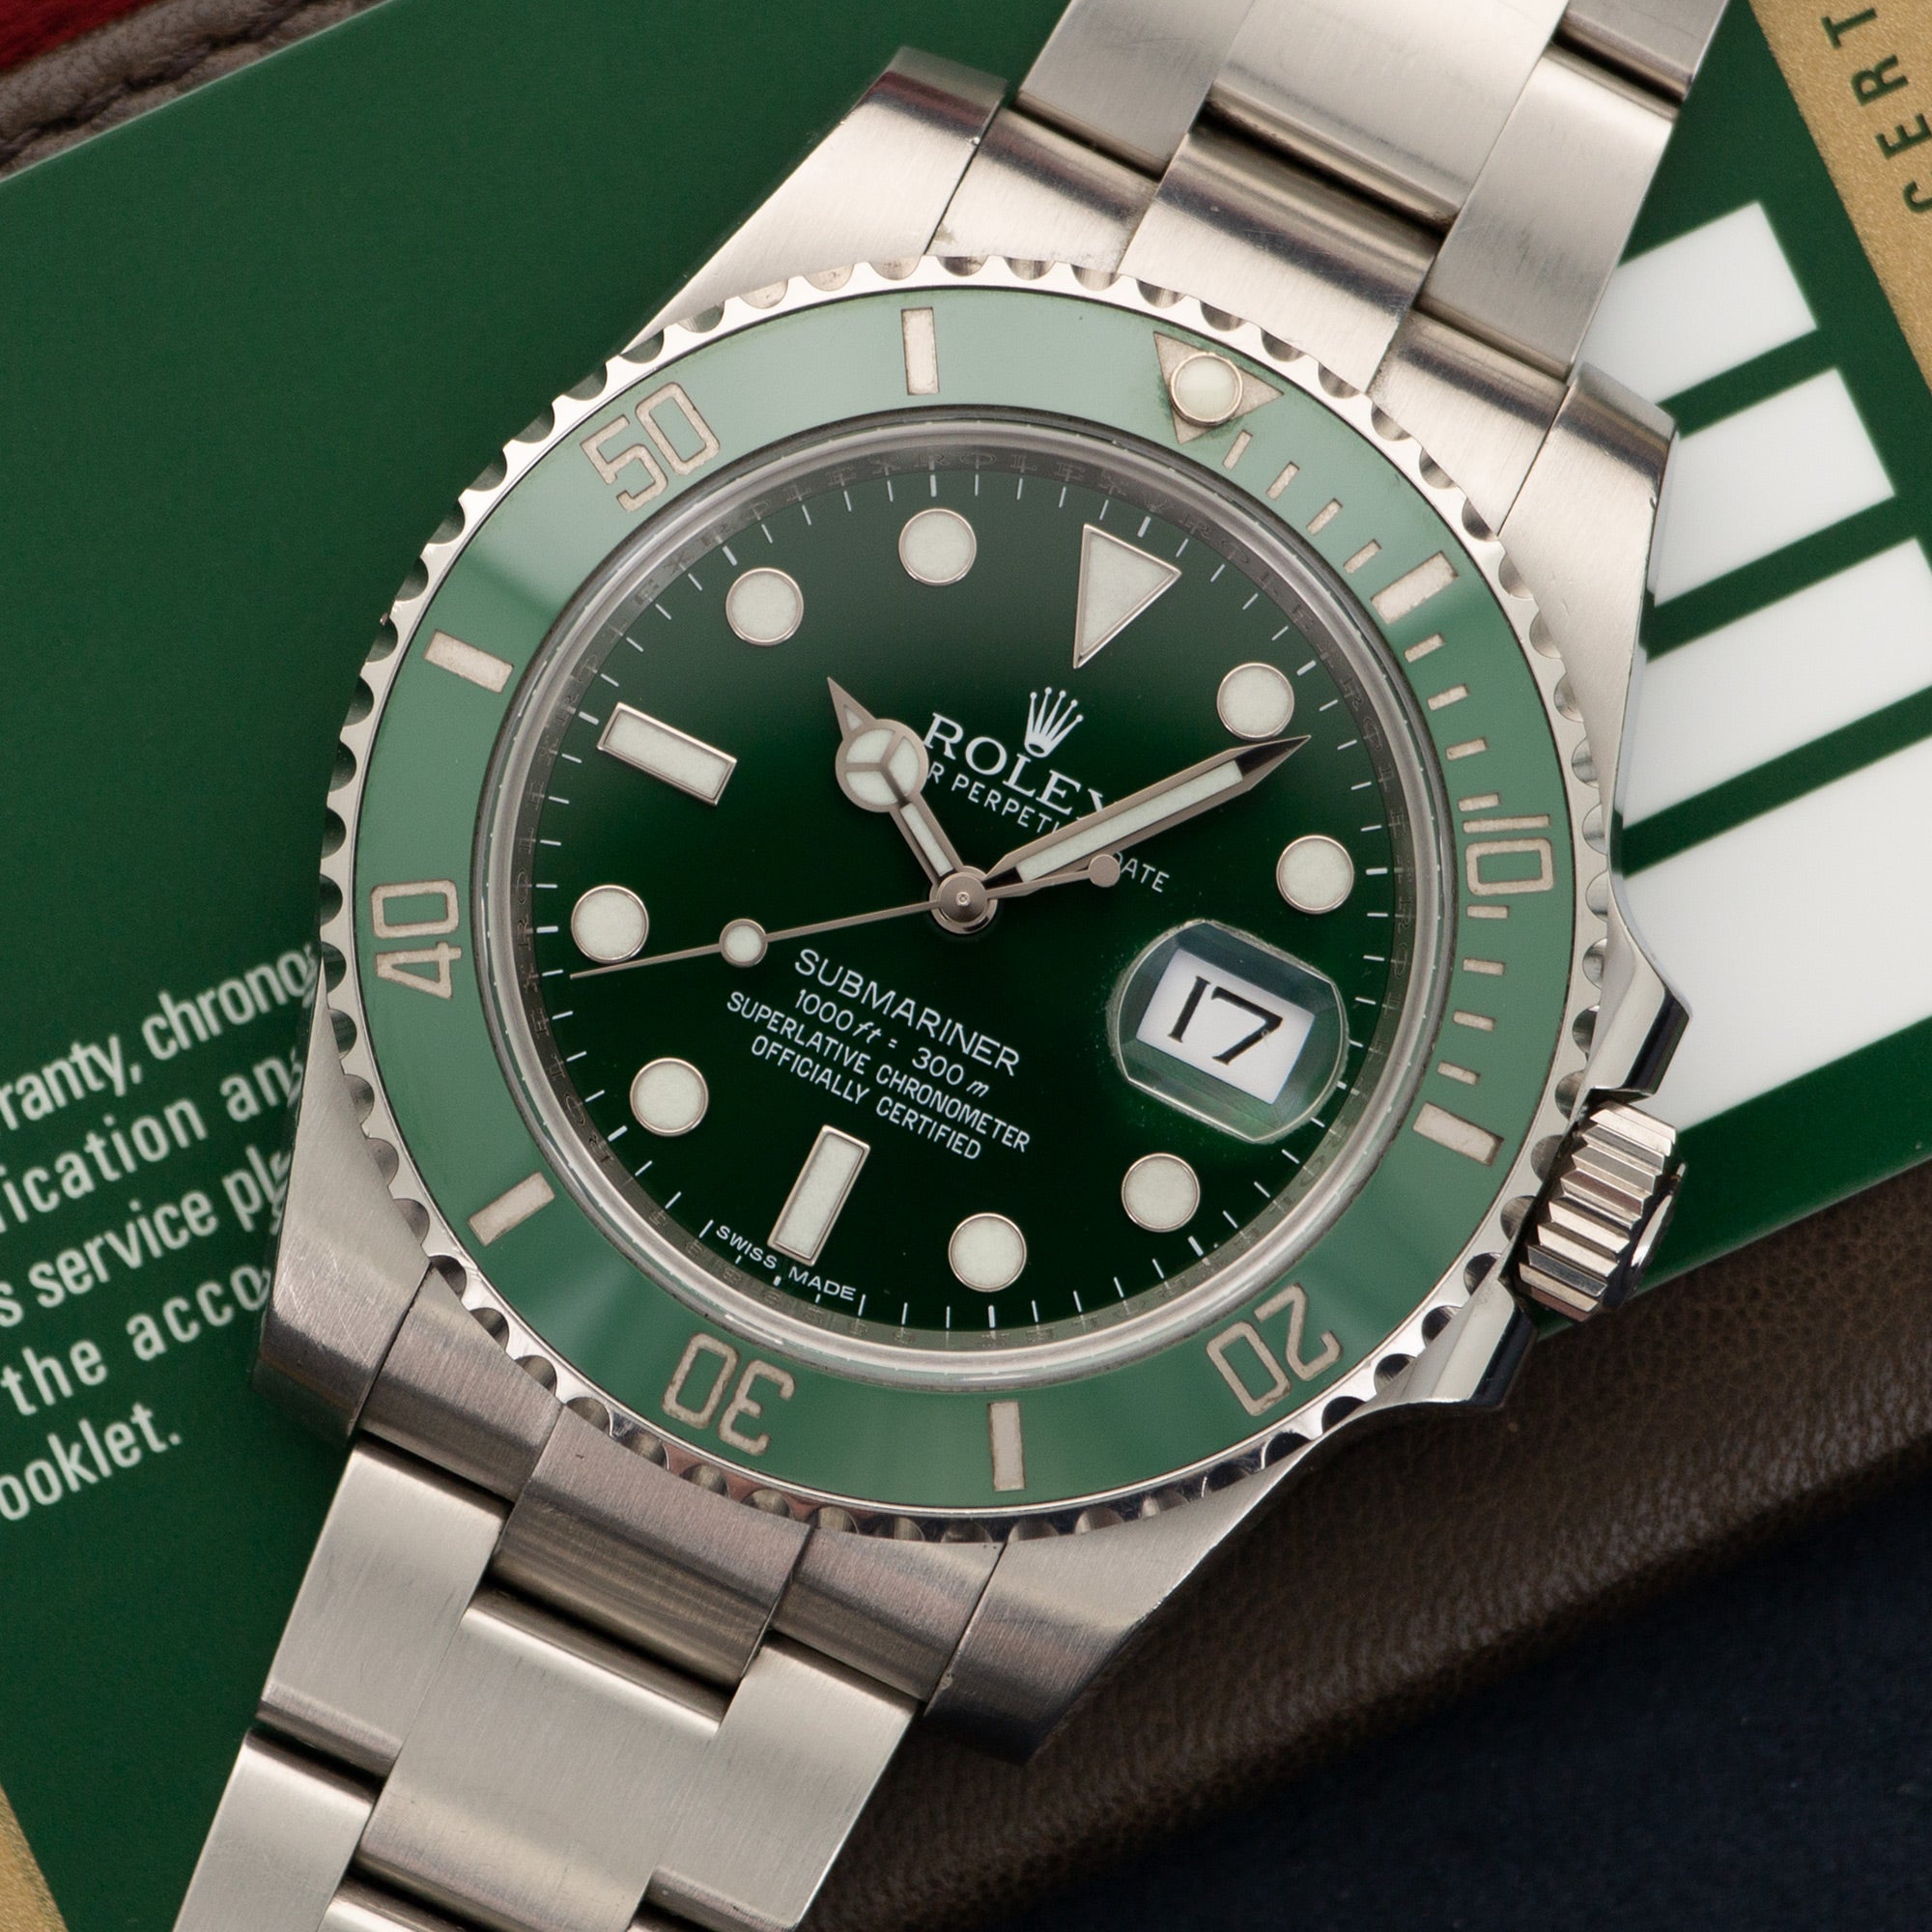 Rolex - Rolex Submariner Green Ceramic Watch Ref. 116610LV with Original Box and Warranty Card - The Keystone Watches